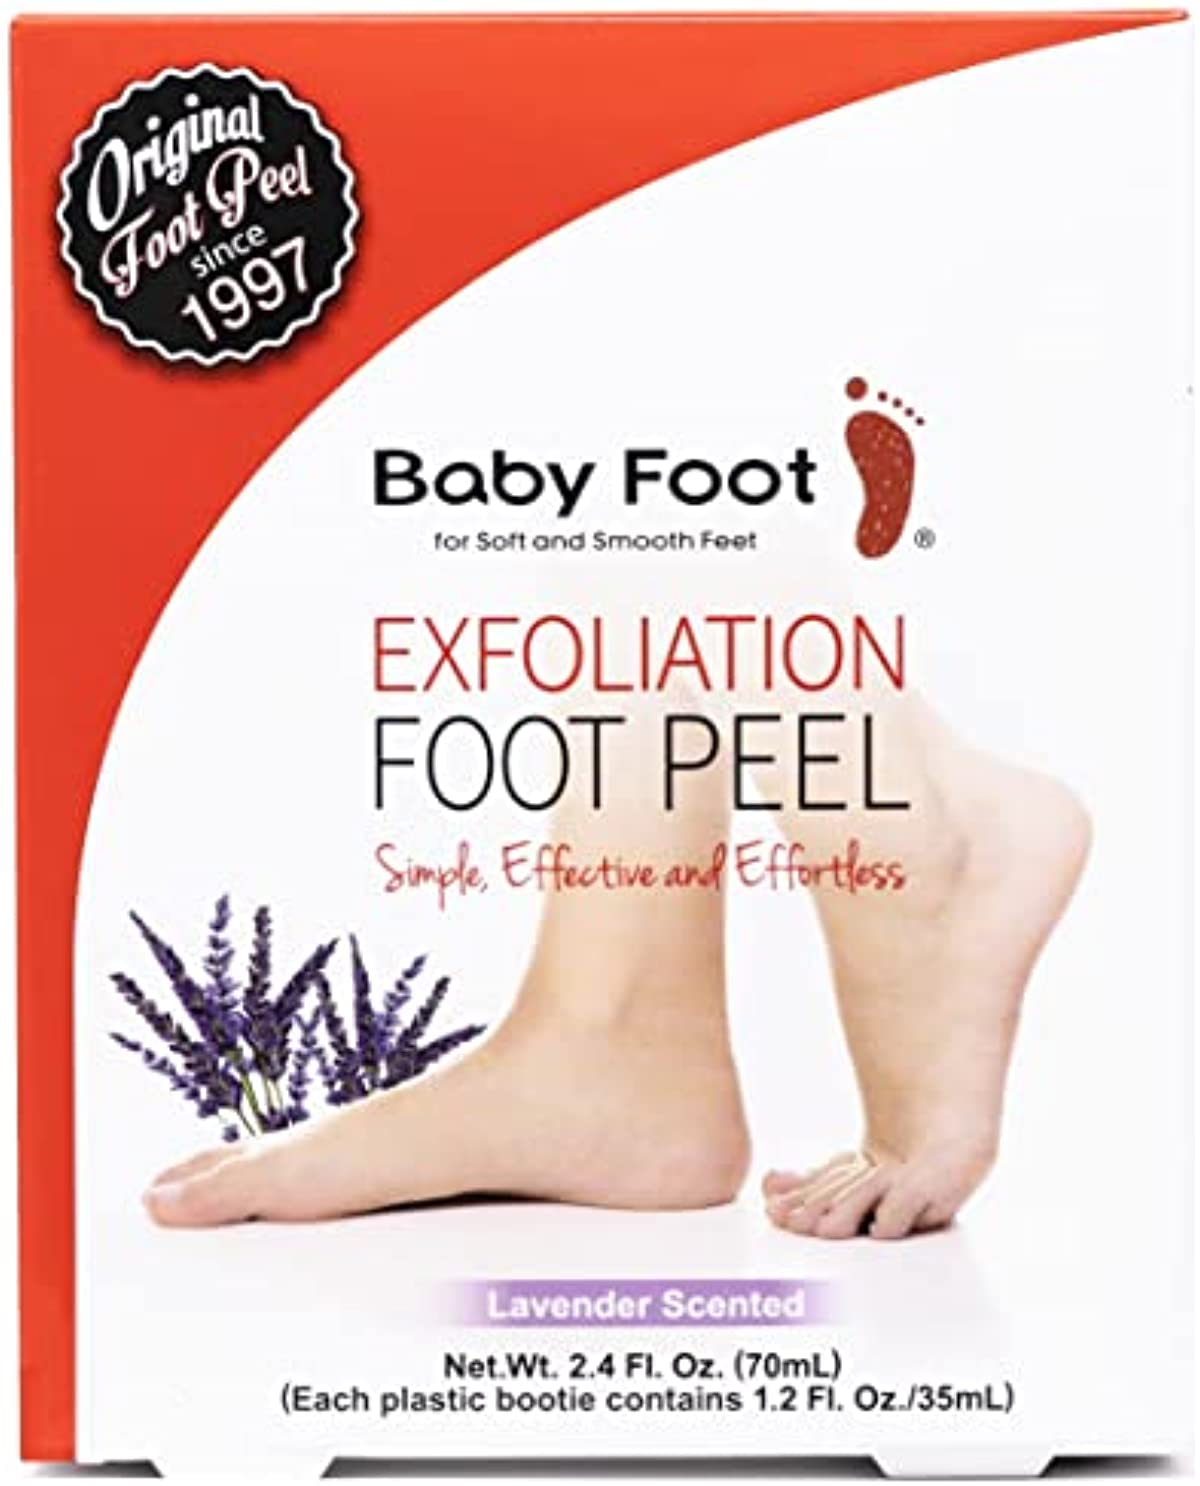 Foot Peel Mask - Baby Foot Original Exfoliant Foot Peel - Repair Rough Dry Cracked Feet and remove Dead Skin, Repair Heels and enjoy Baby Soft Smooth Feet 2.4 Fl. Oz. Lavender Scented Pair